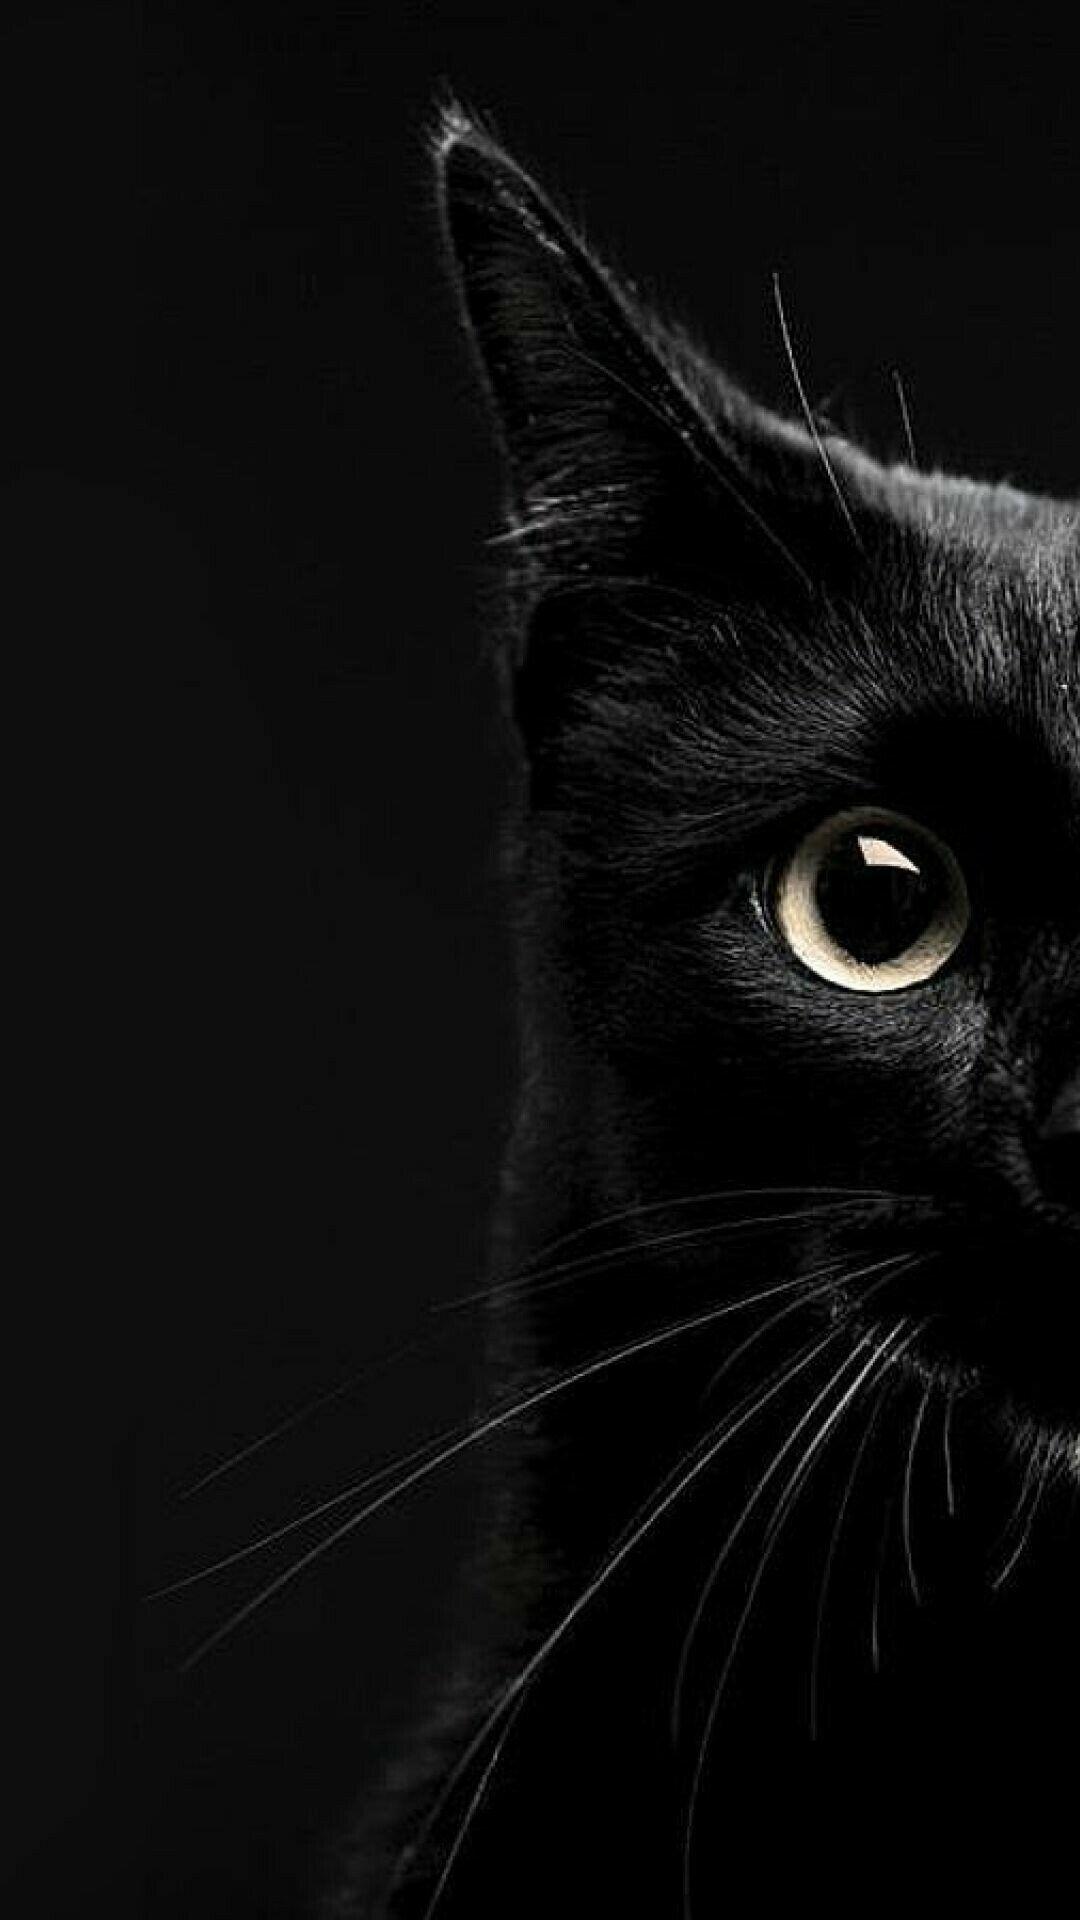  Aesthetic  Black  Cat  Wallpapers  Top Free Aesthetic  Black  